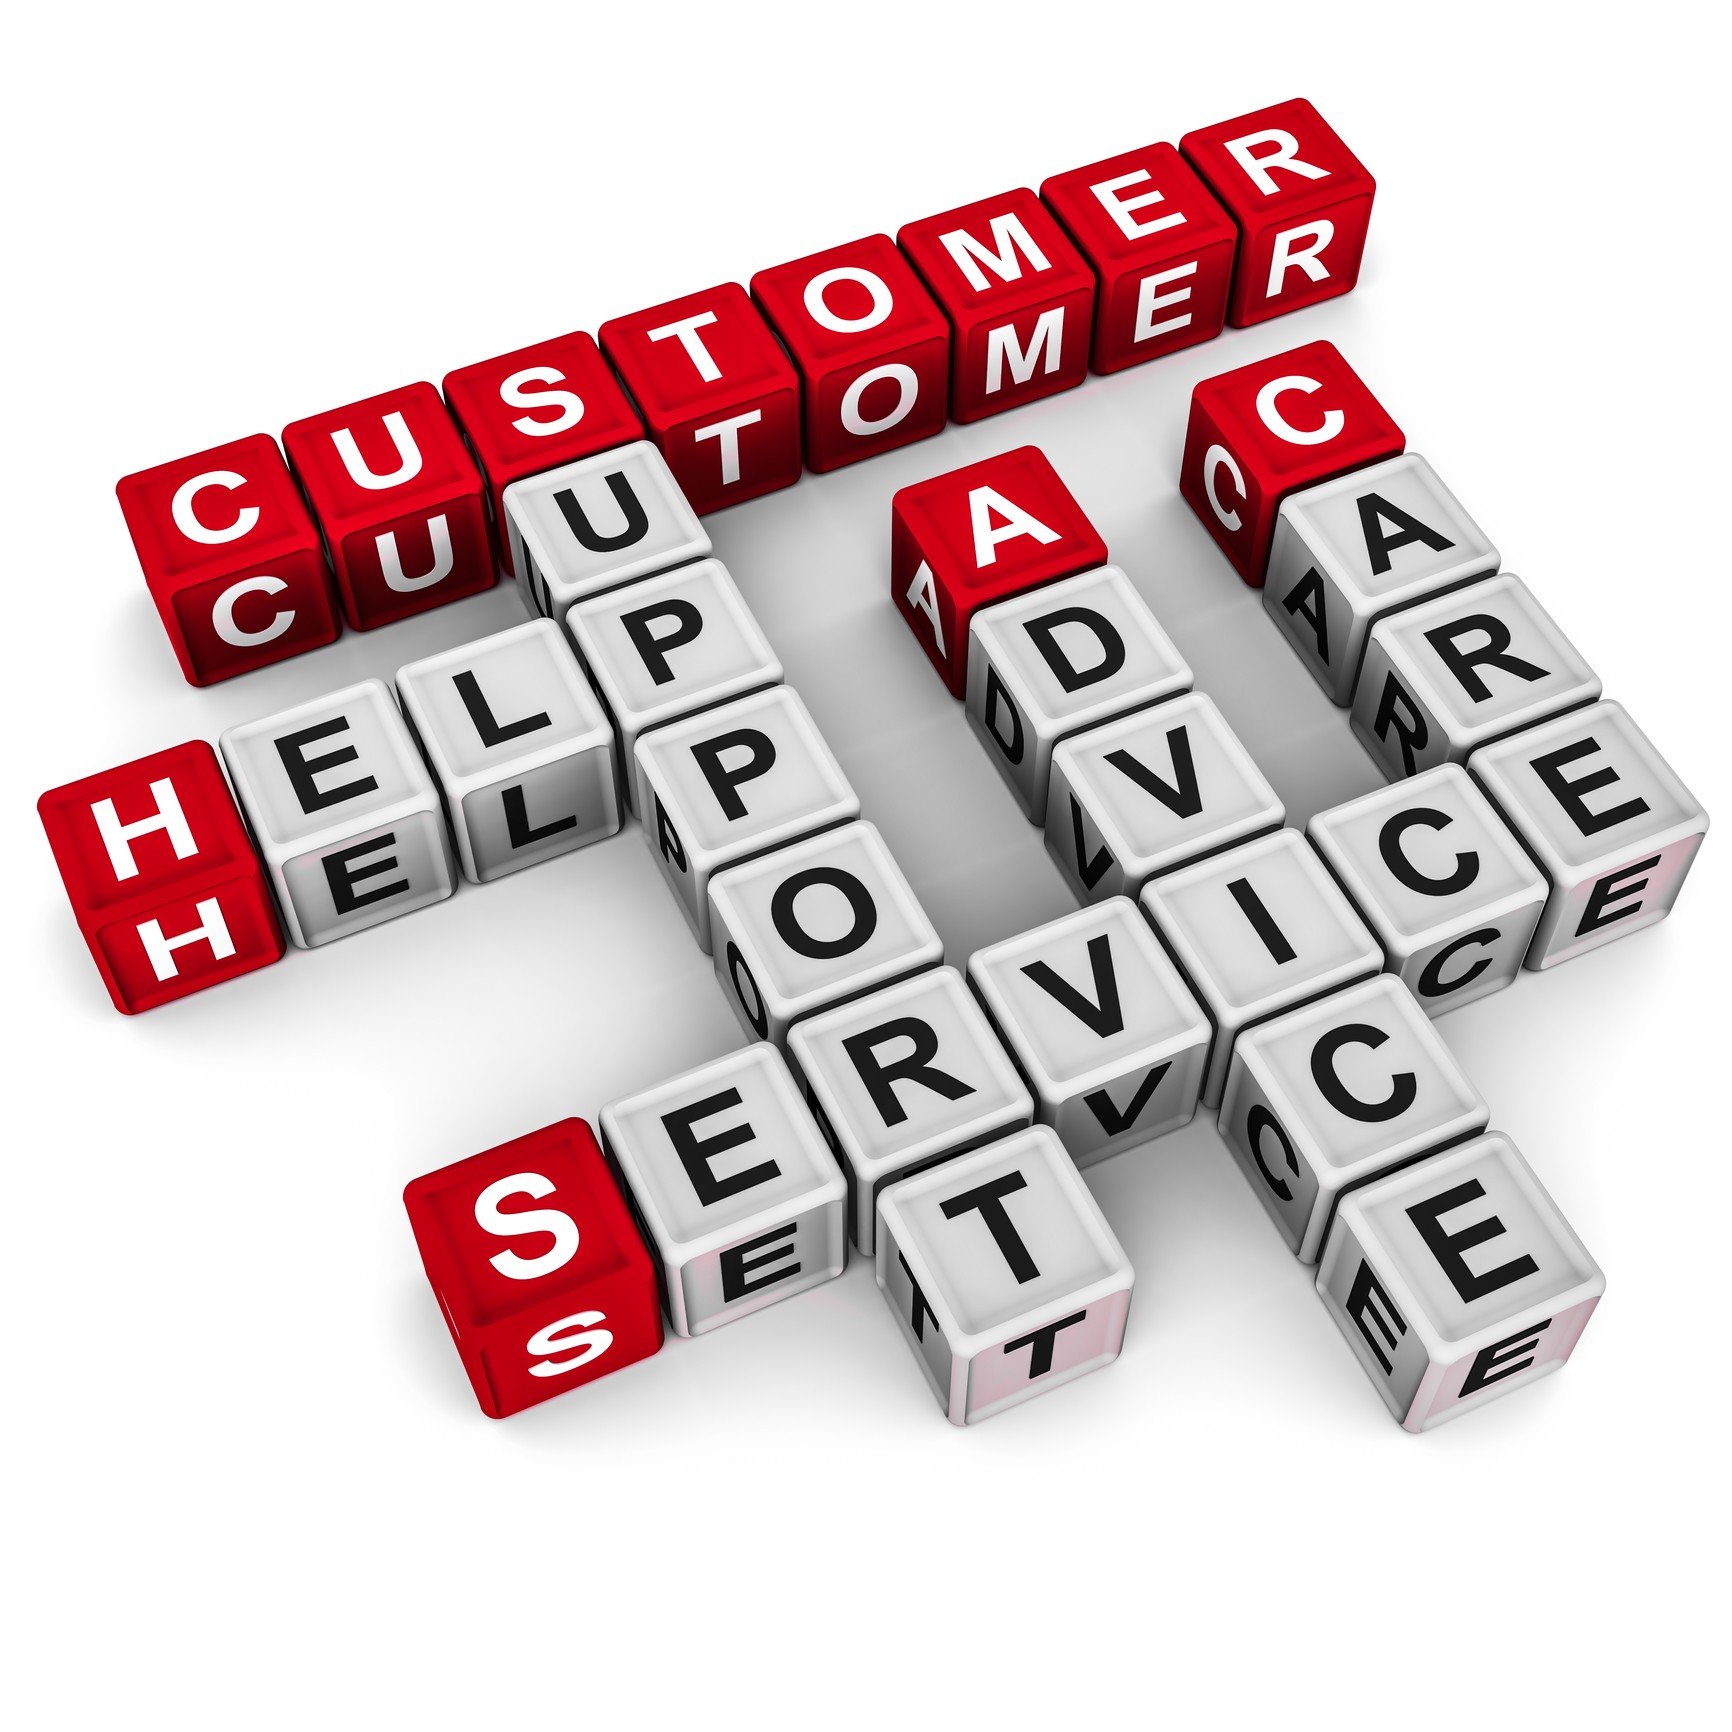 Customer service word blocks